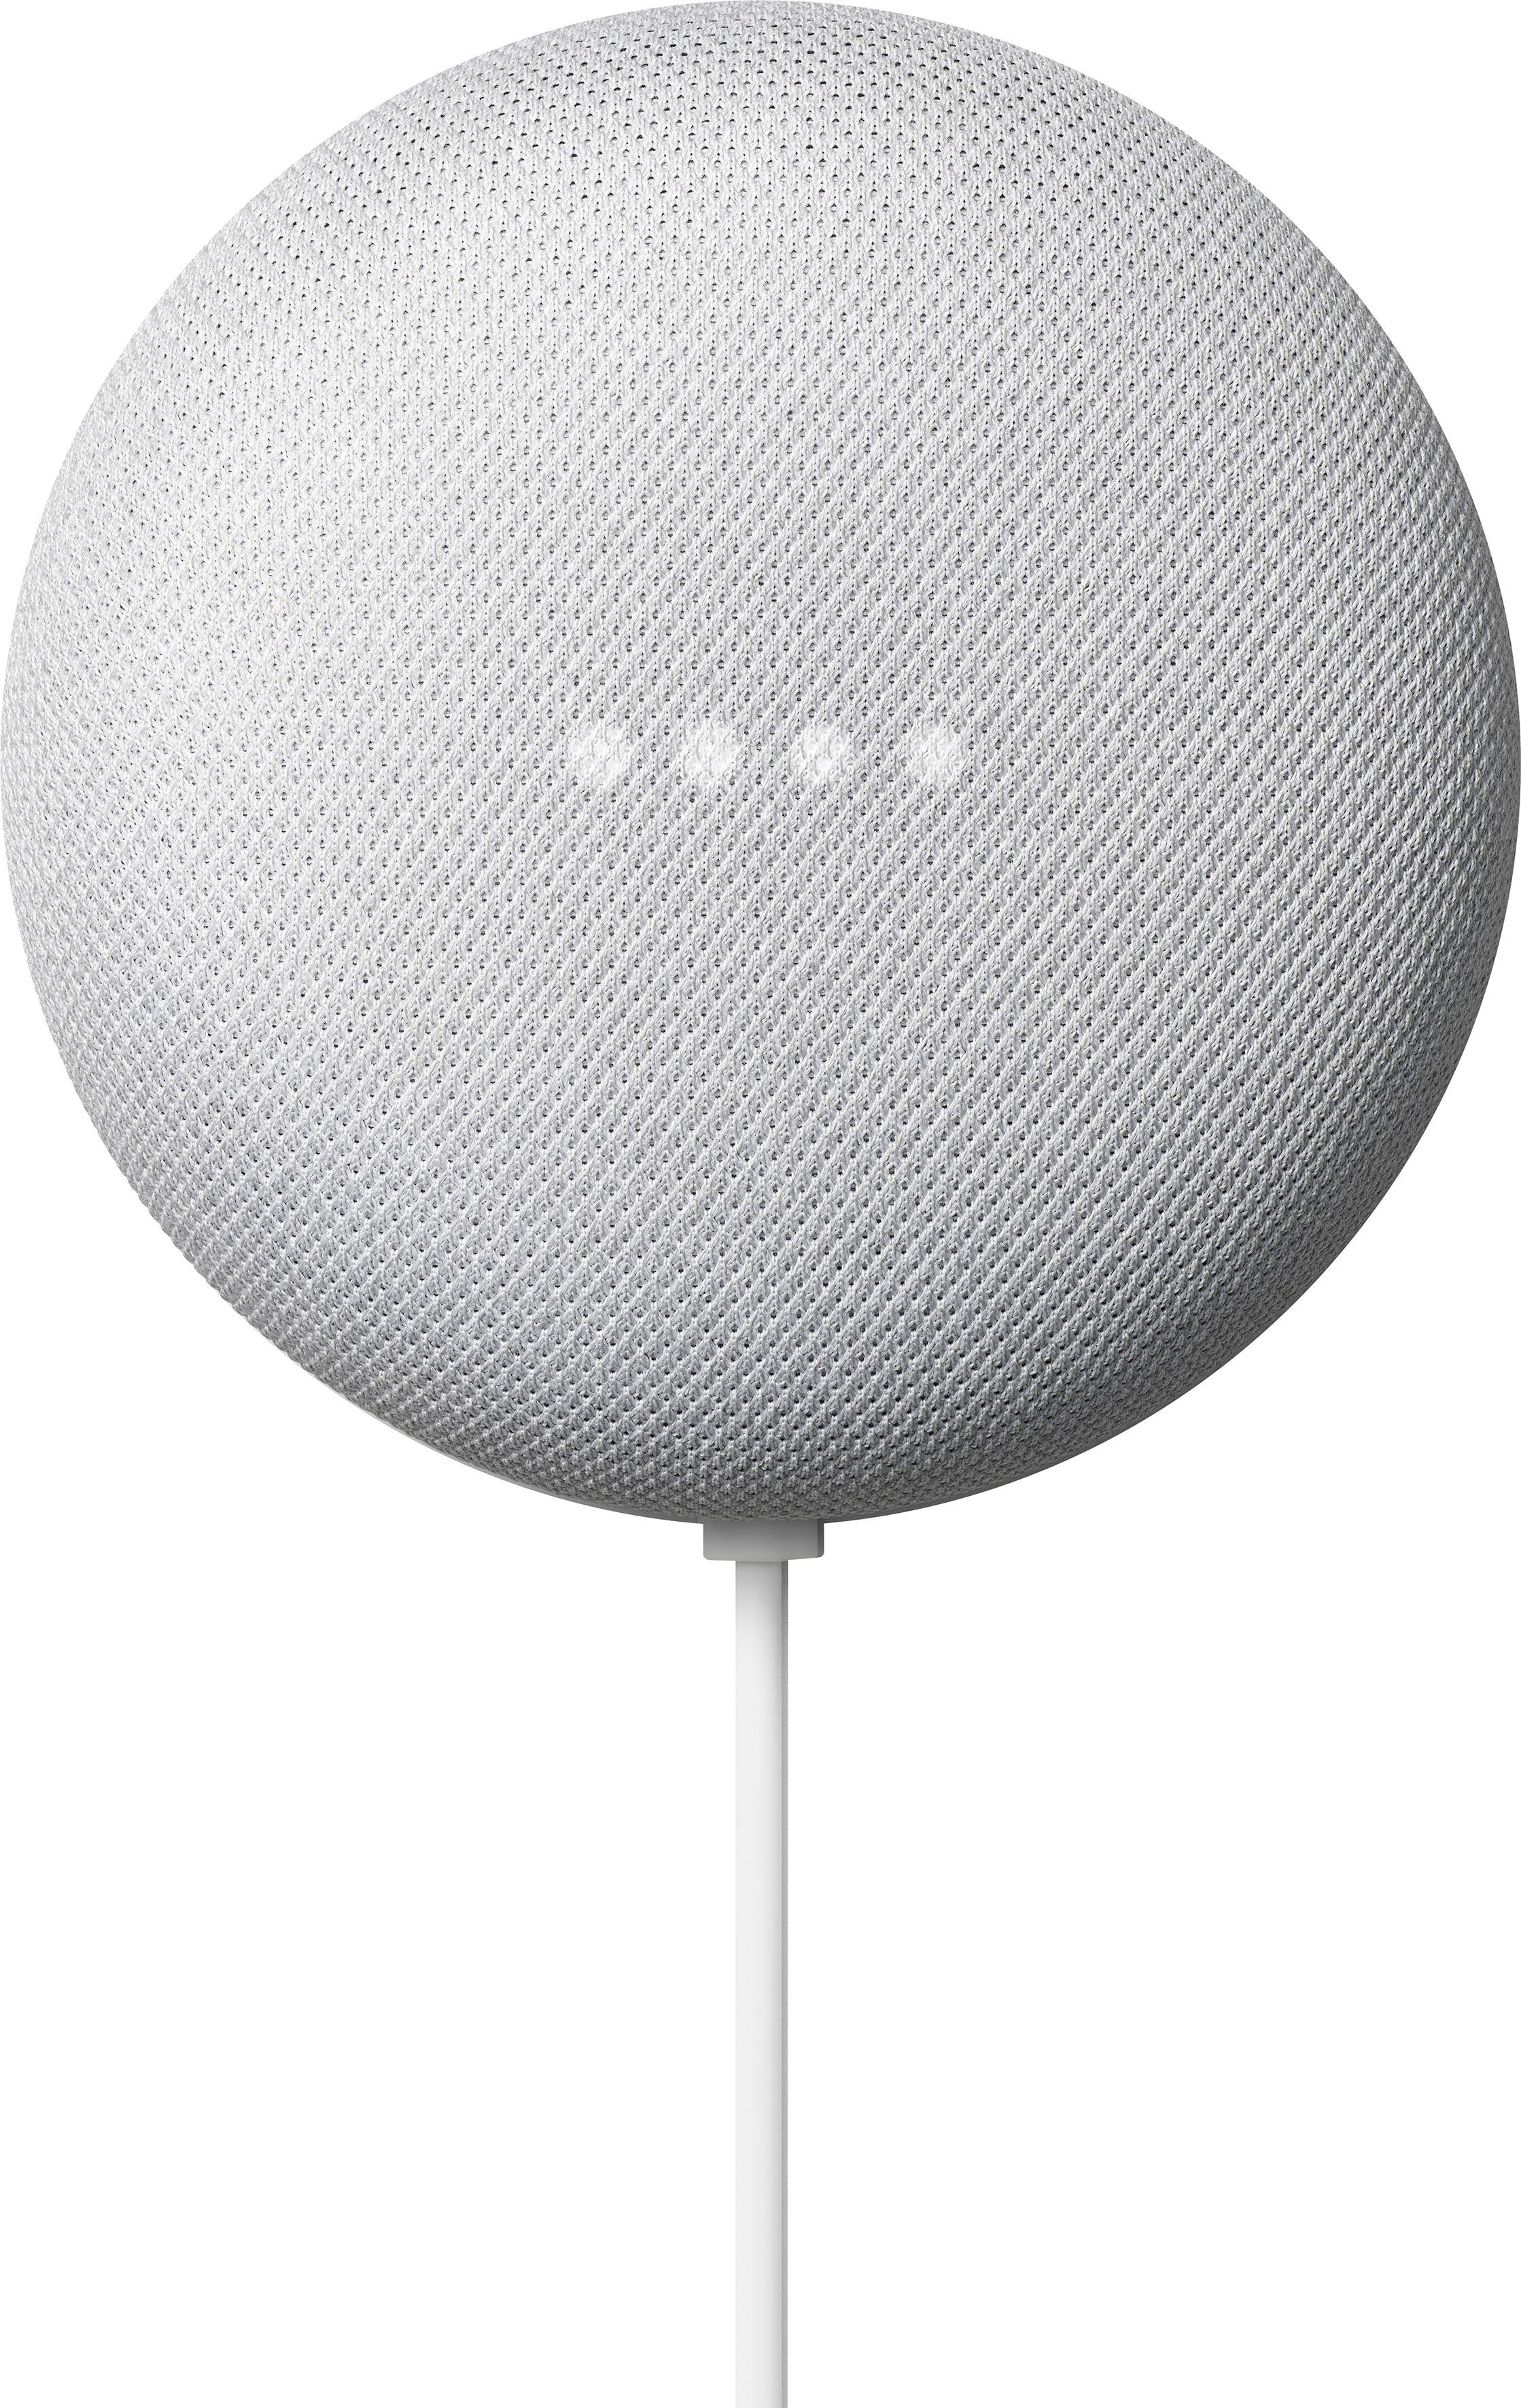 Google Nest Mini (2. Generation) Smart Lautsprecher Smart Speaker